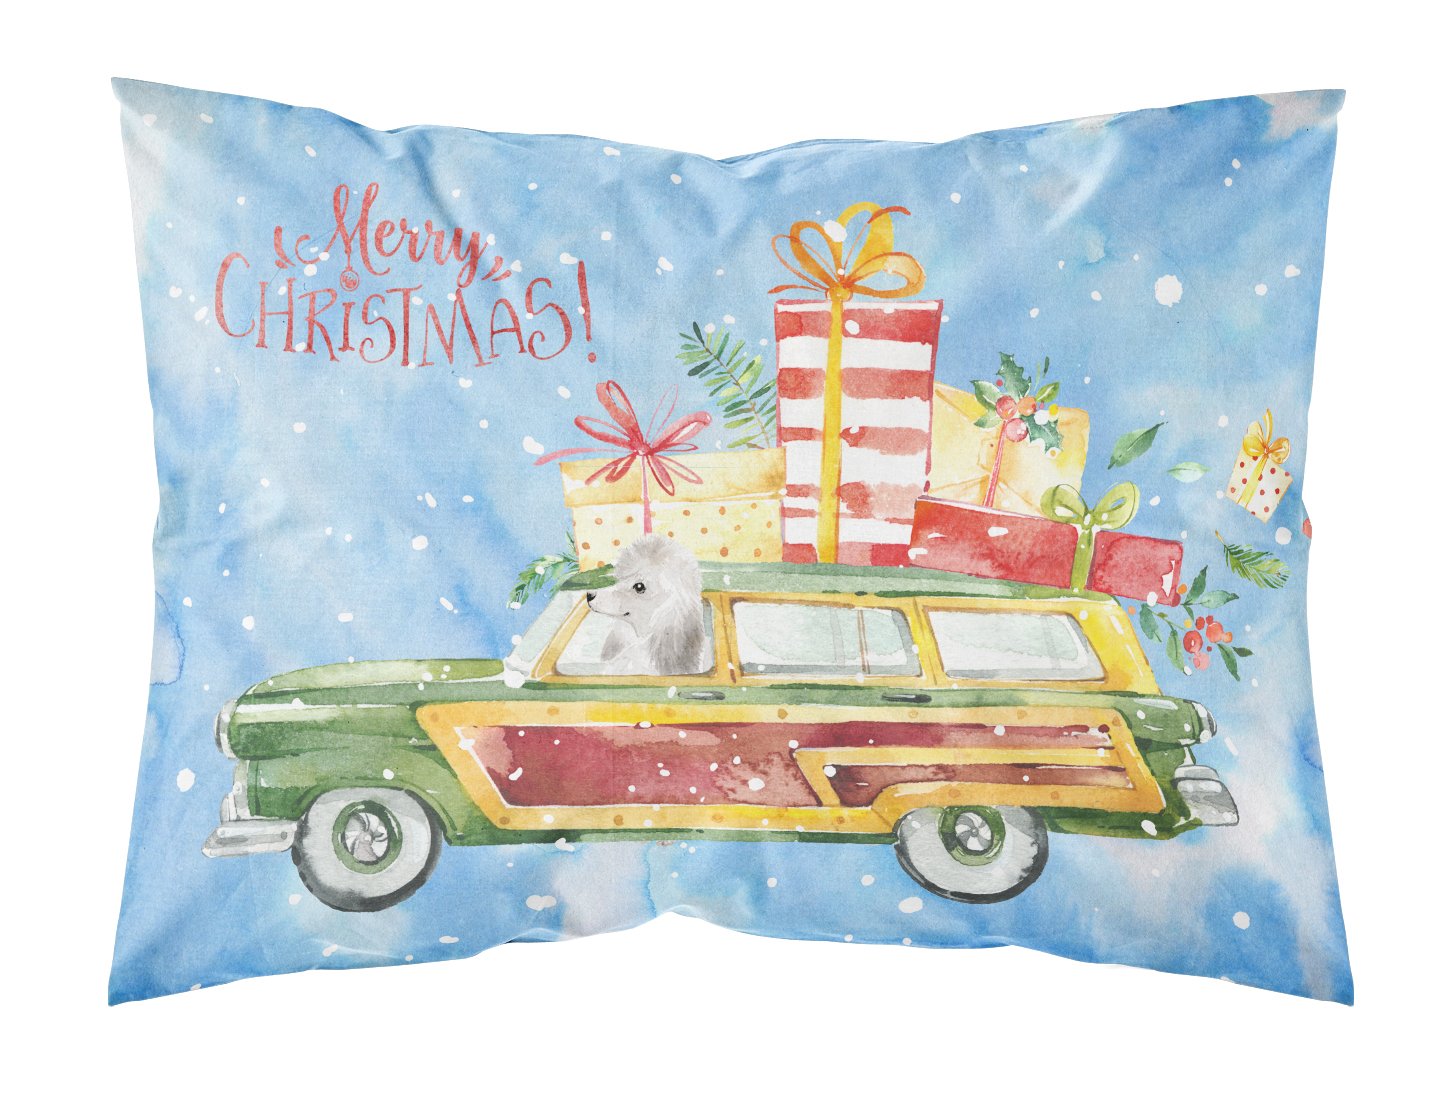 Merry Christmas White Poodle Fabric Standard Pillowcase CK2466PILLOWCASE by Caroline's Treasures